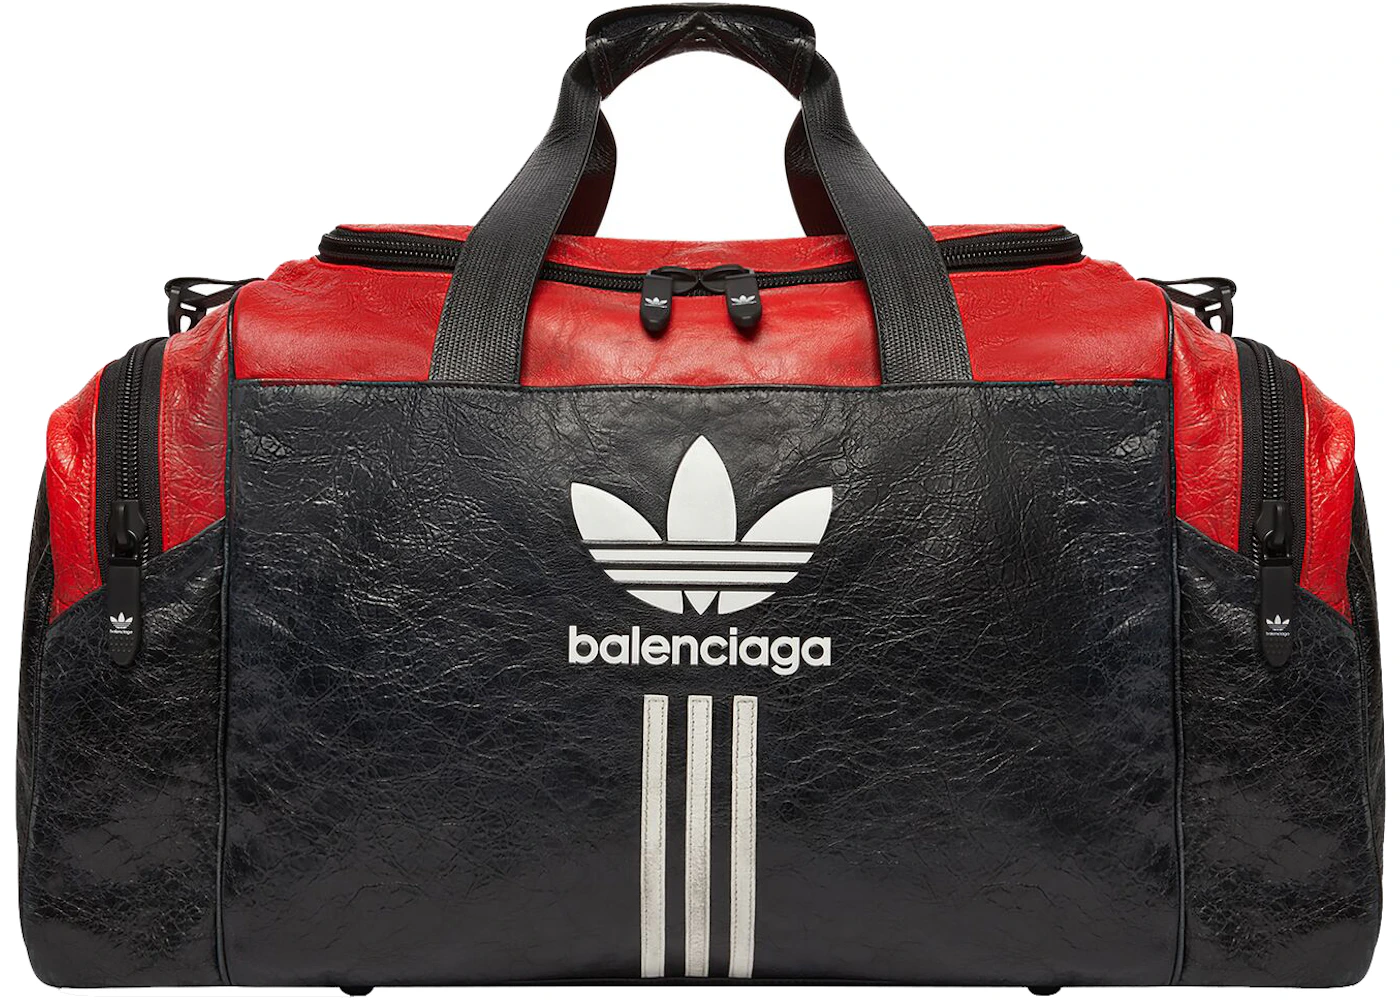 Balenciaga x adidas Bag Black/Red in Aged Lambskin Leather - US